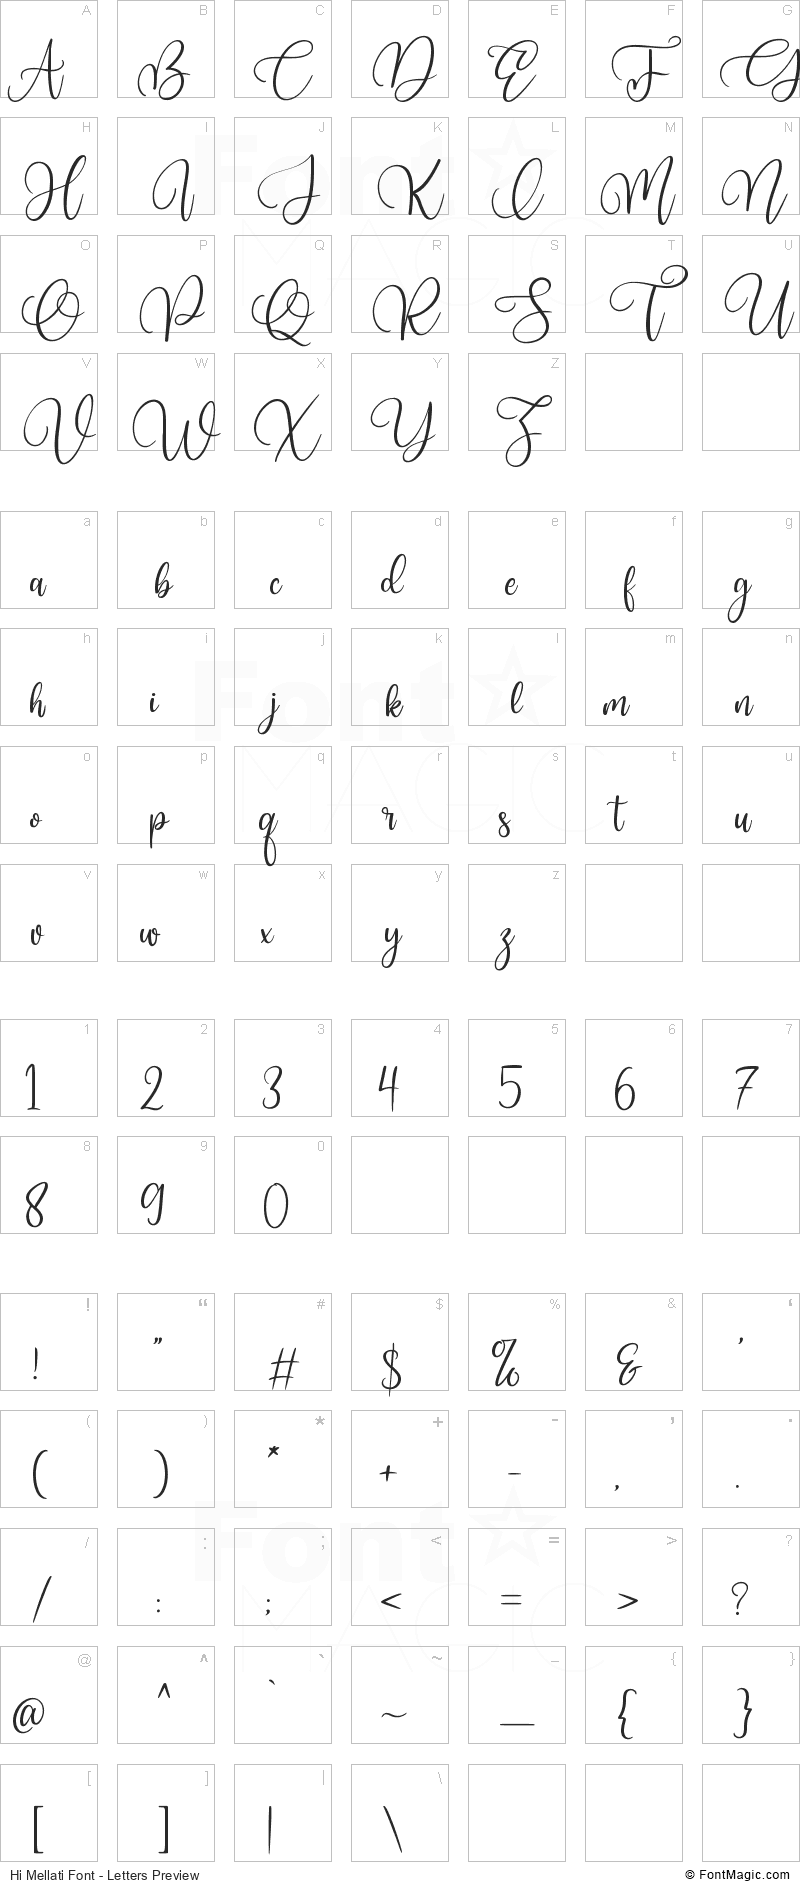 Hi Mellati Font - All Latters Preview Chart